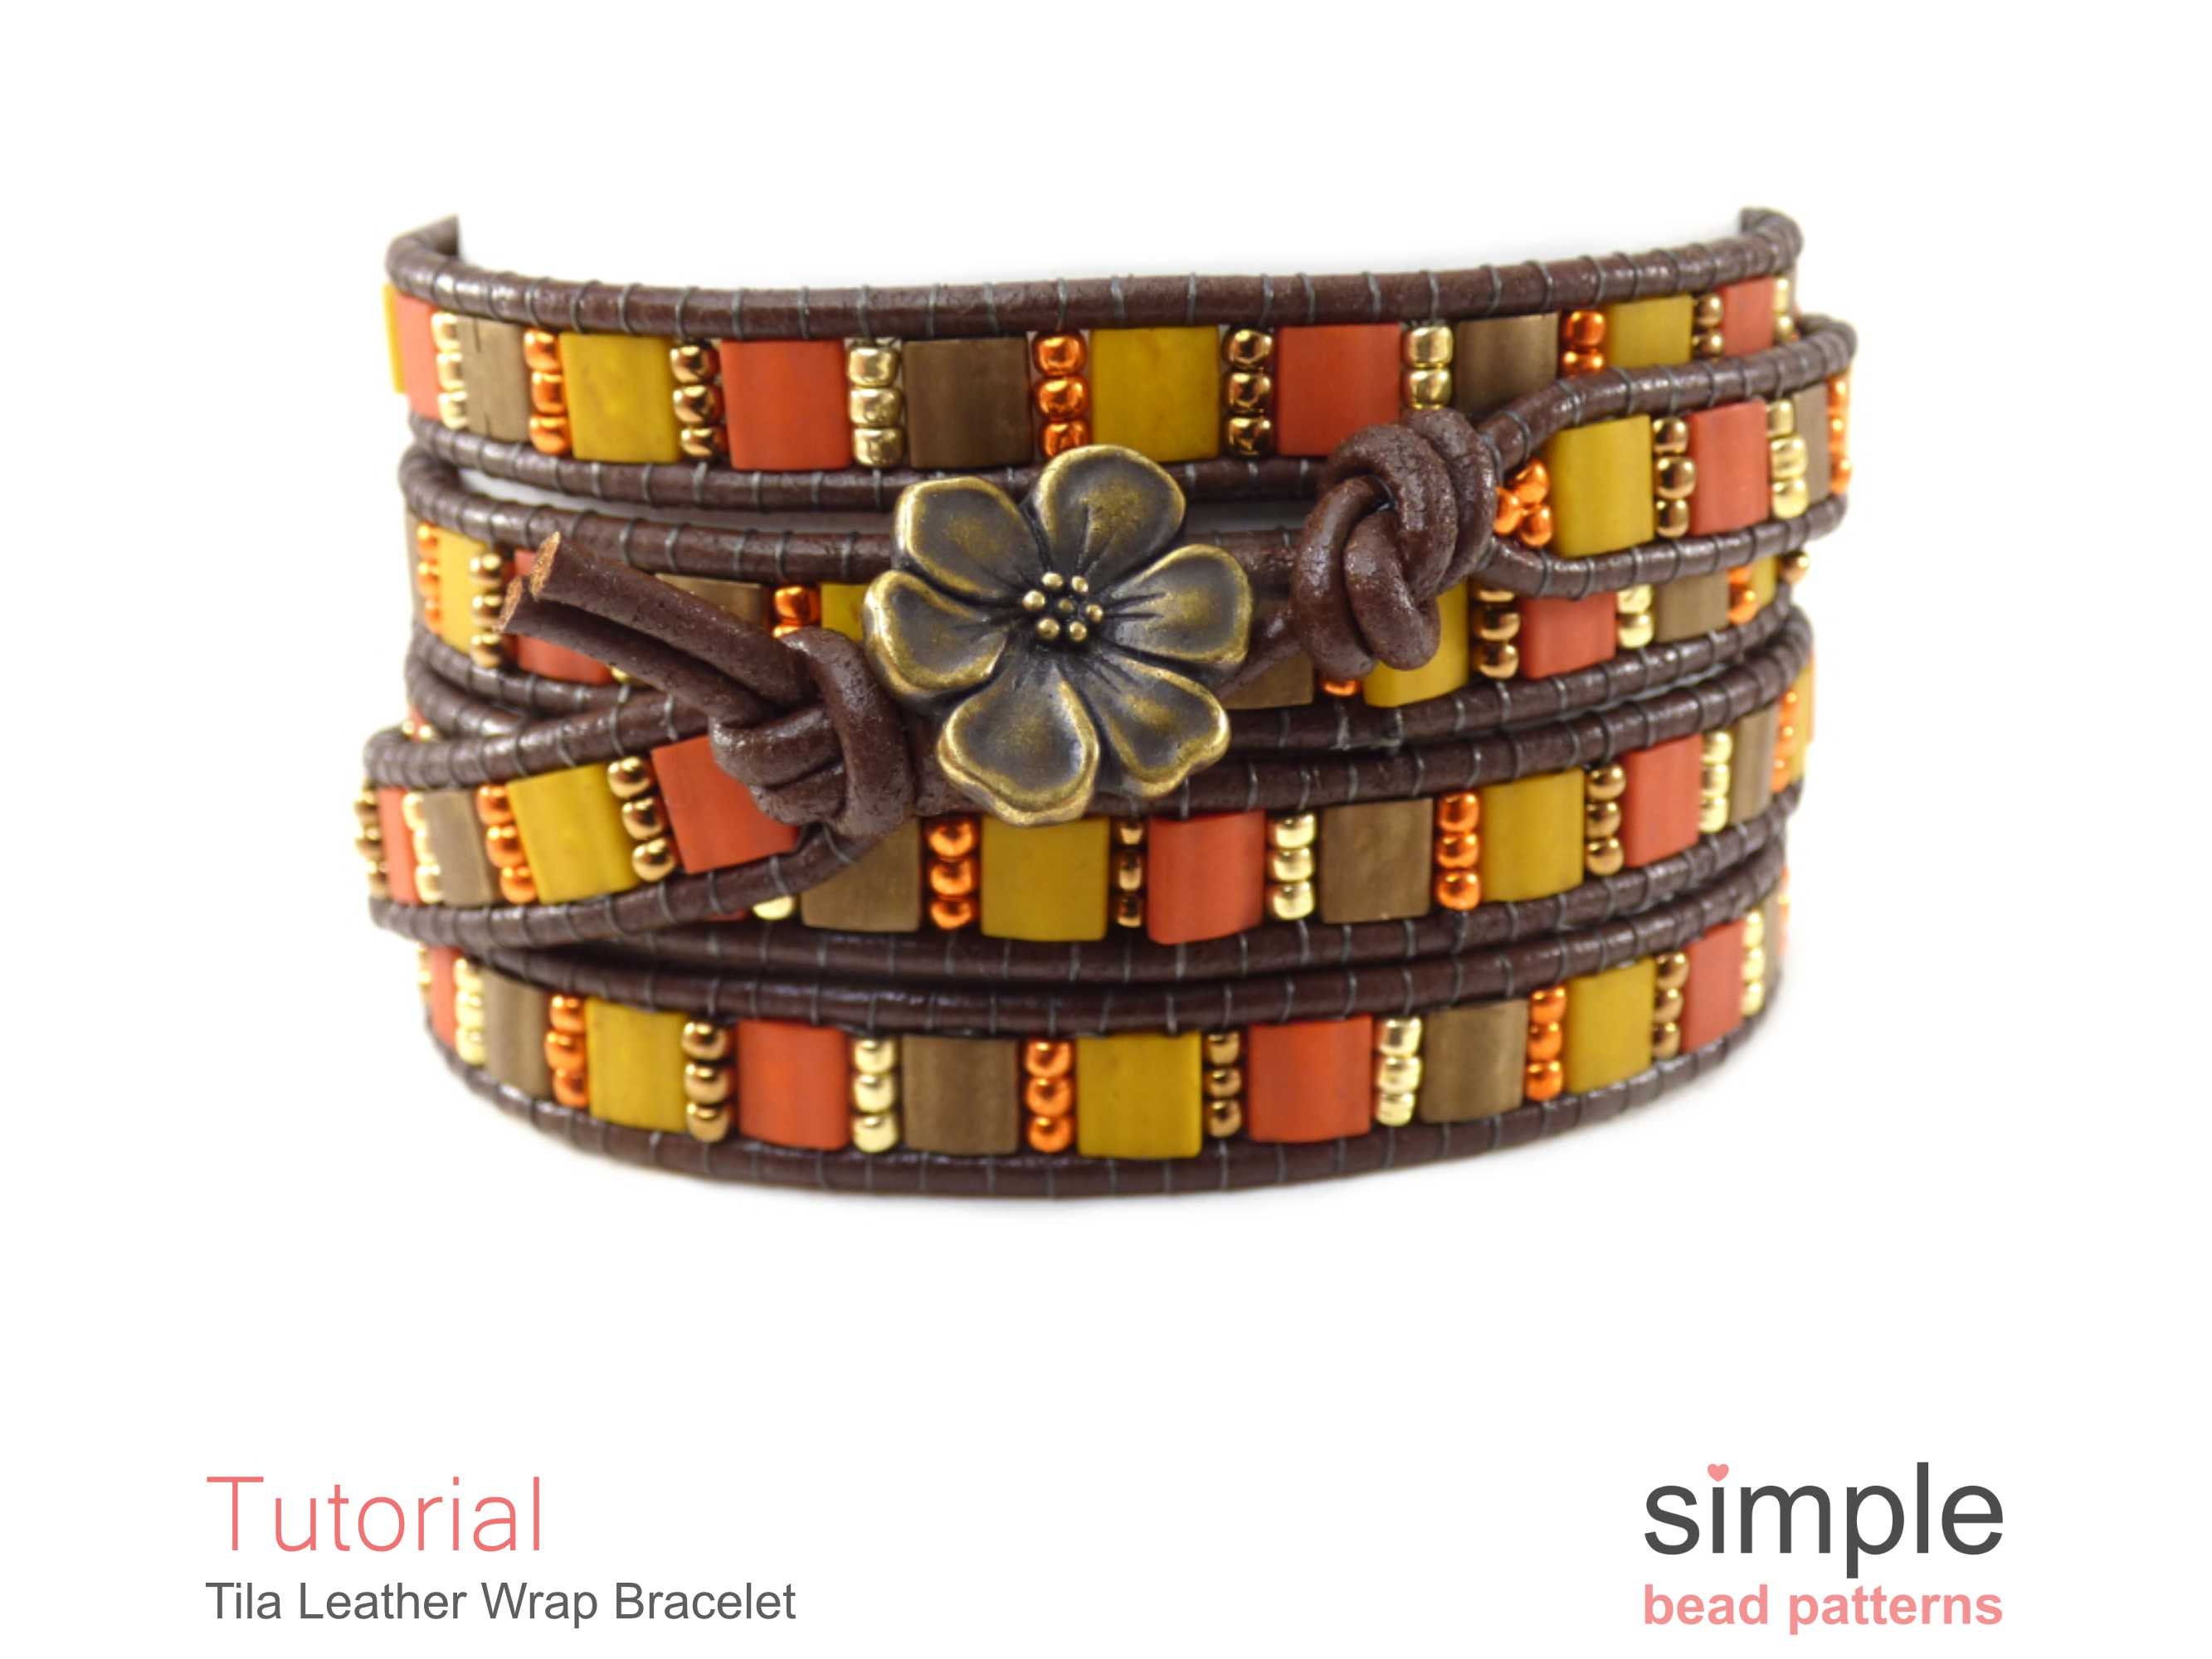 DIY Fabric Bracelet Kit, African Fabric Bangles, African Bracelet, Jewelry Making  Kit, DIY Jewelry Kit, Bracelet Craft Kit for Adult 